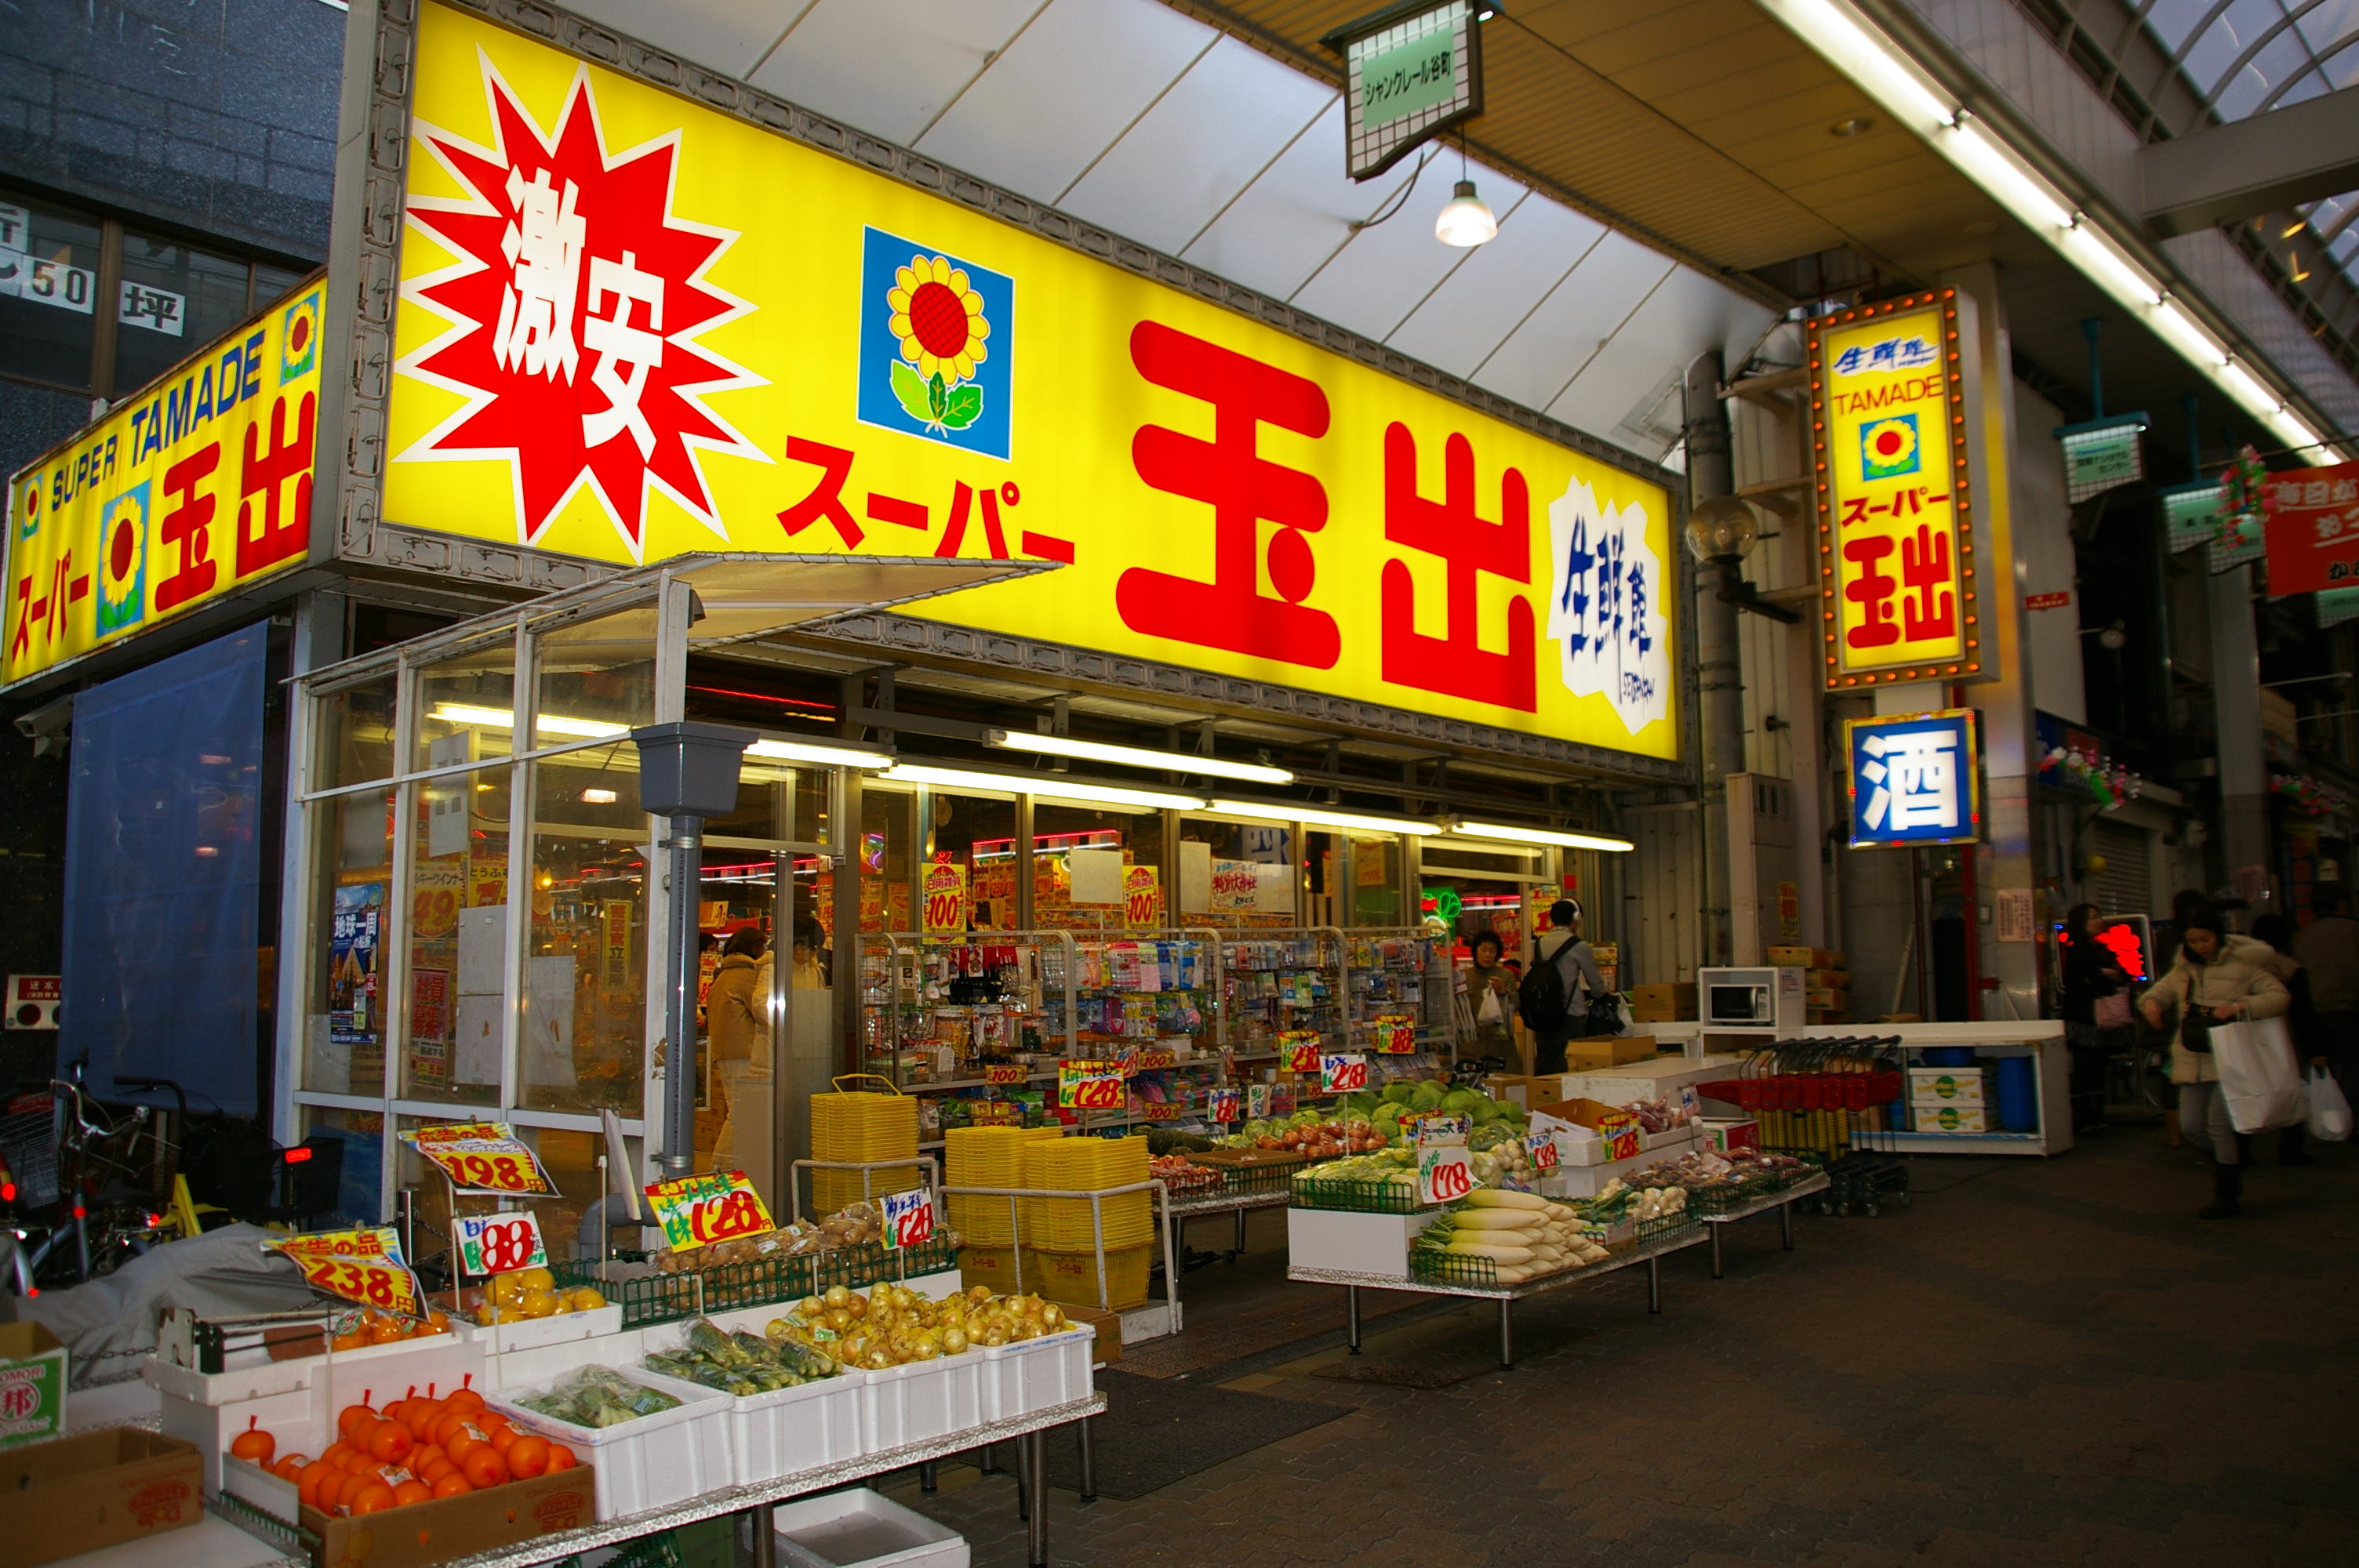 Supermarket. 827m to Super Tamade Karahori store (Super)